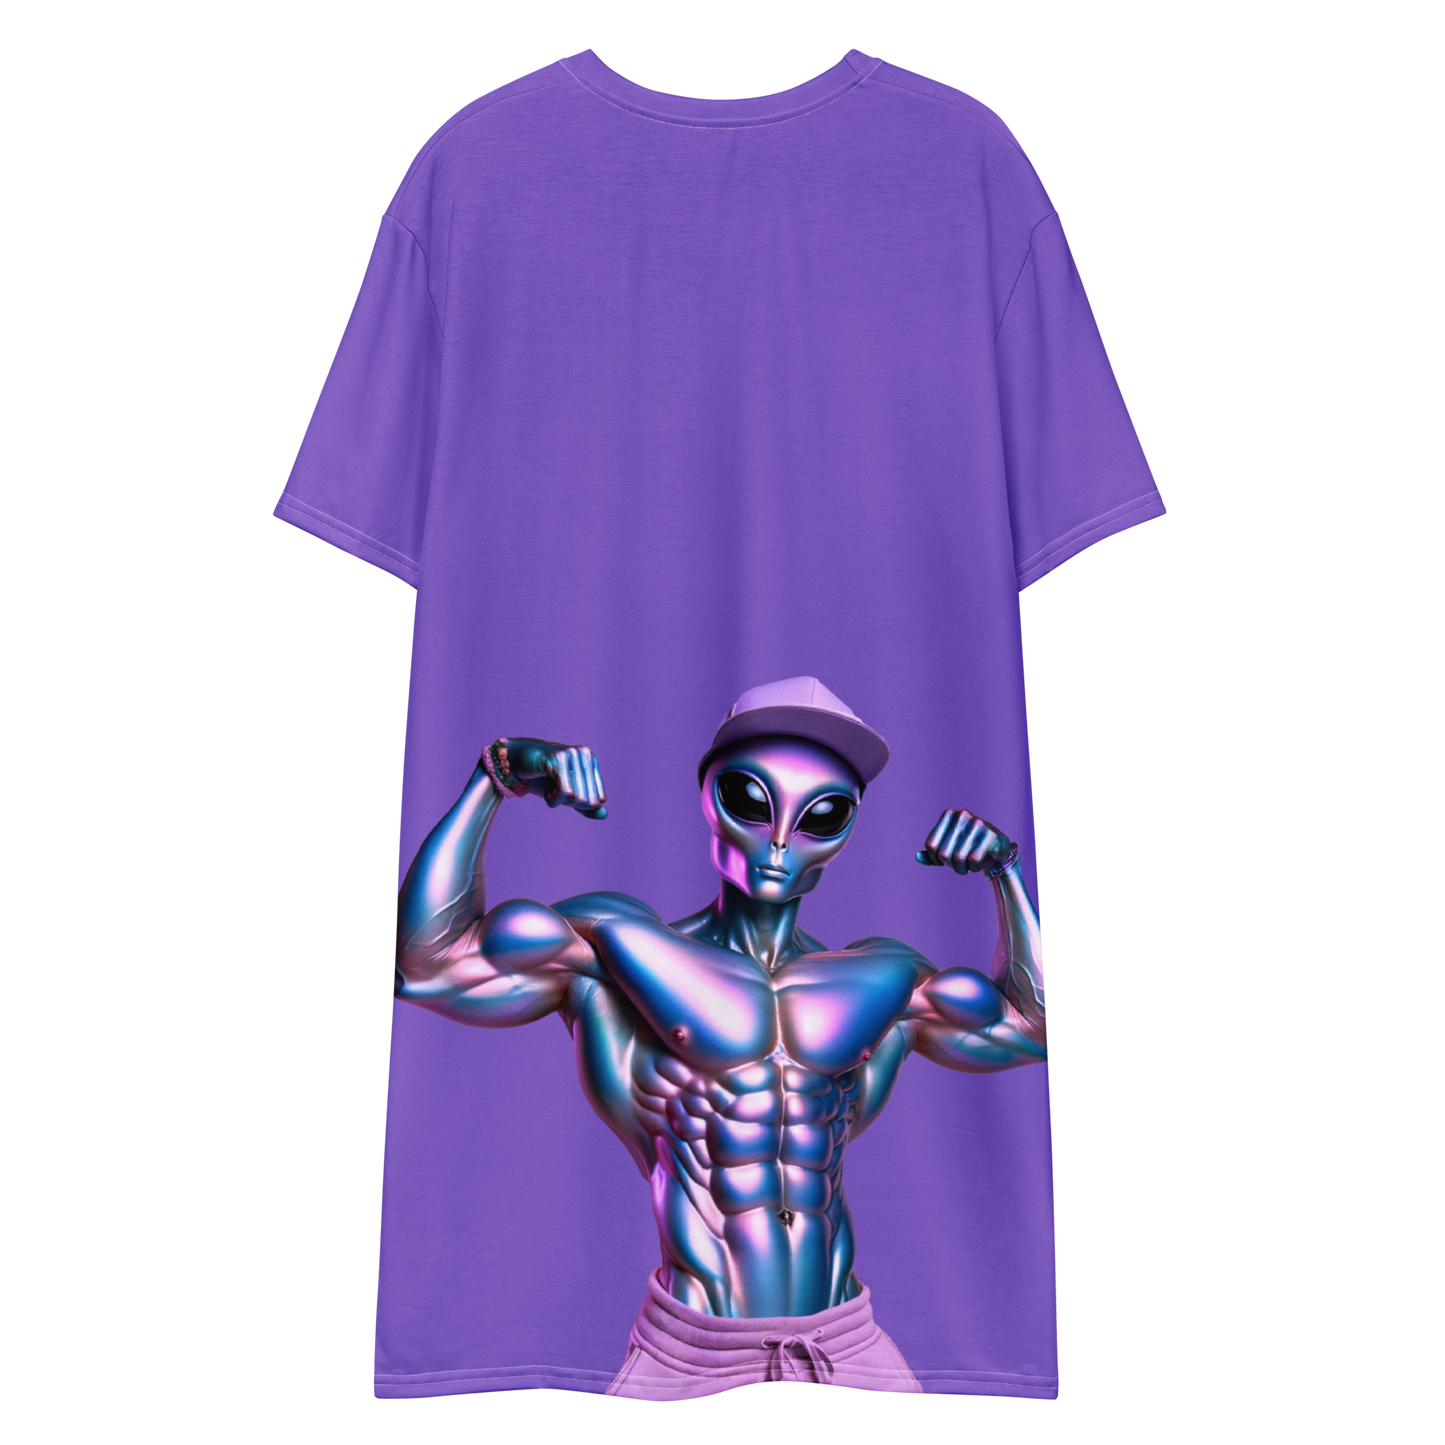 Flextraterrestrial Joe T-shirt Dress